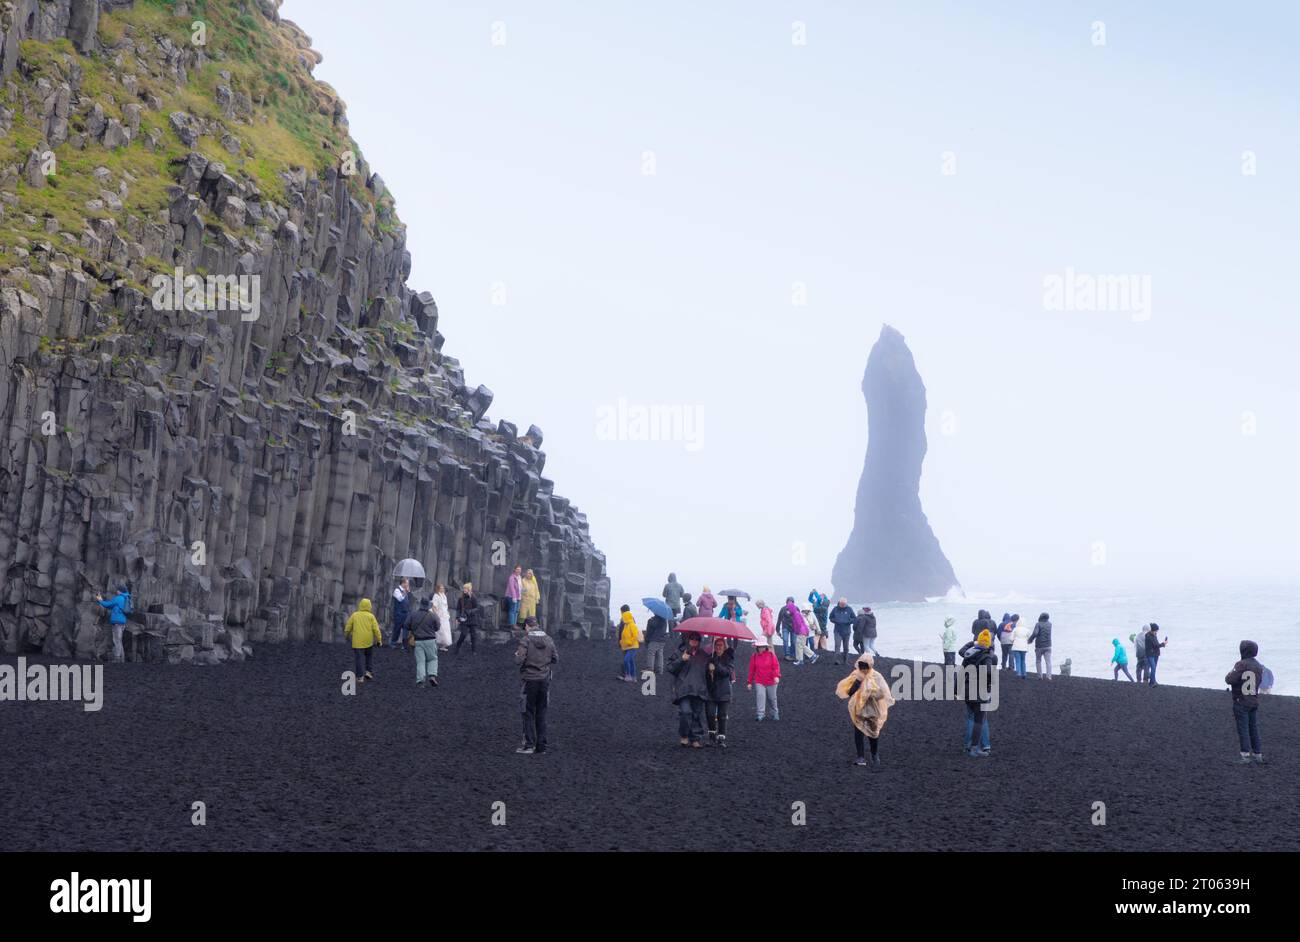 Iceland coast; people on Vik black sand beach, or Reynisfjara beach, Iceland South Coast, basalt cliffs and results of volcanic activity; Vik, Iceland Stock Photo